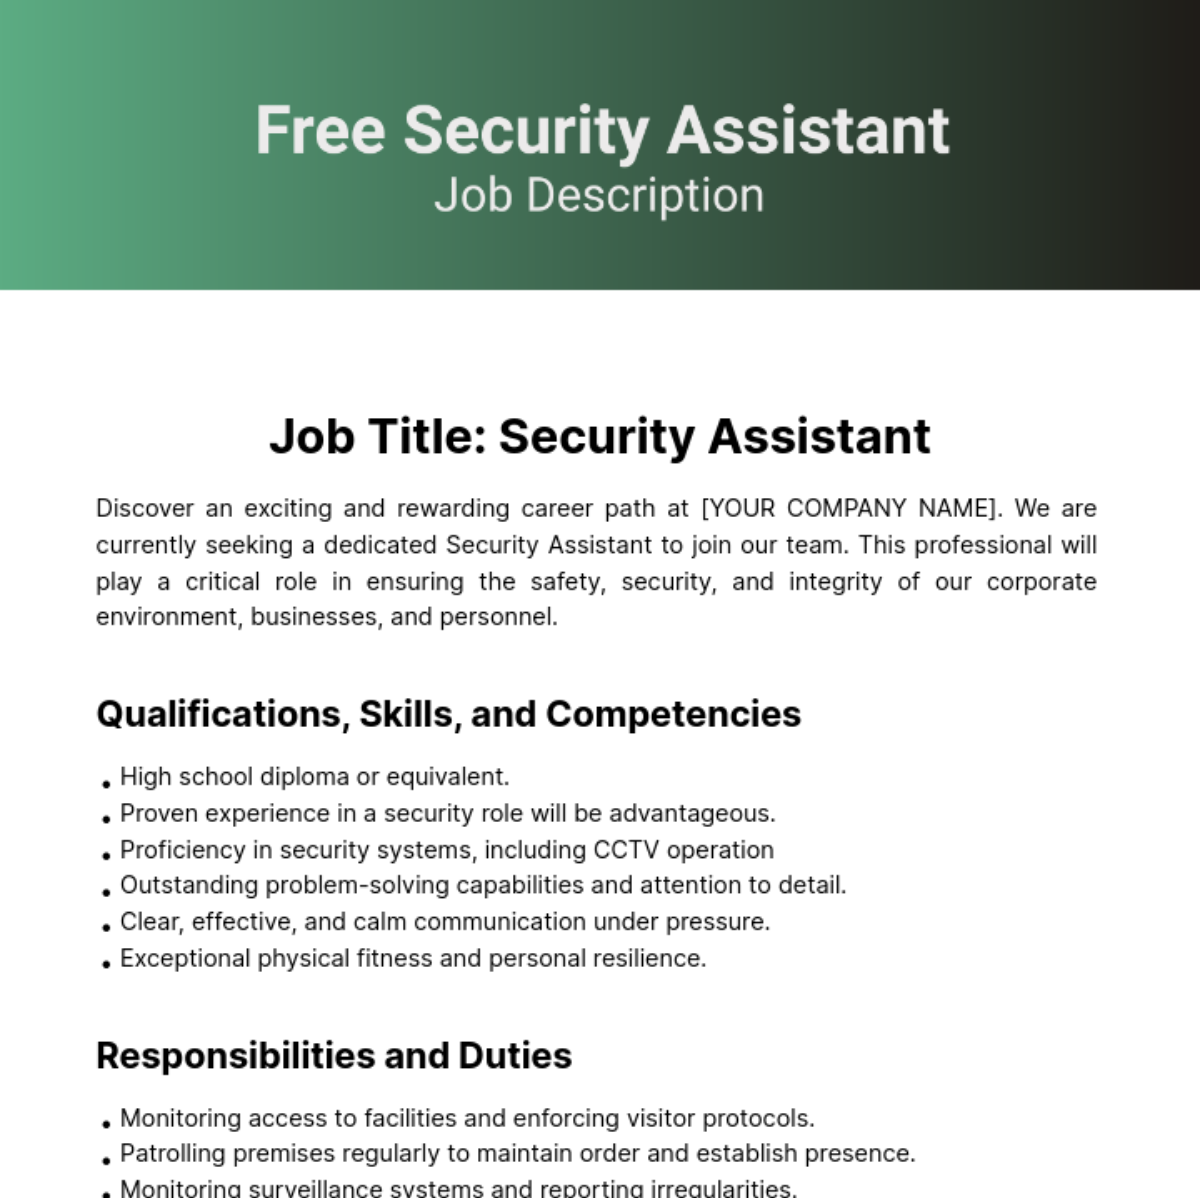 Free Security Assistant Job Description Template